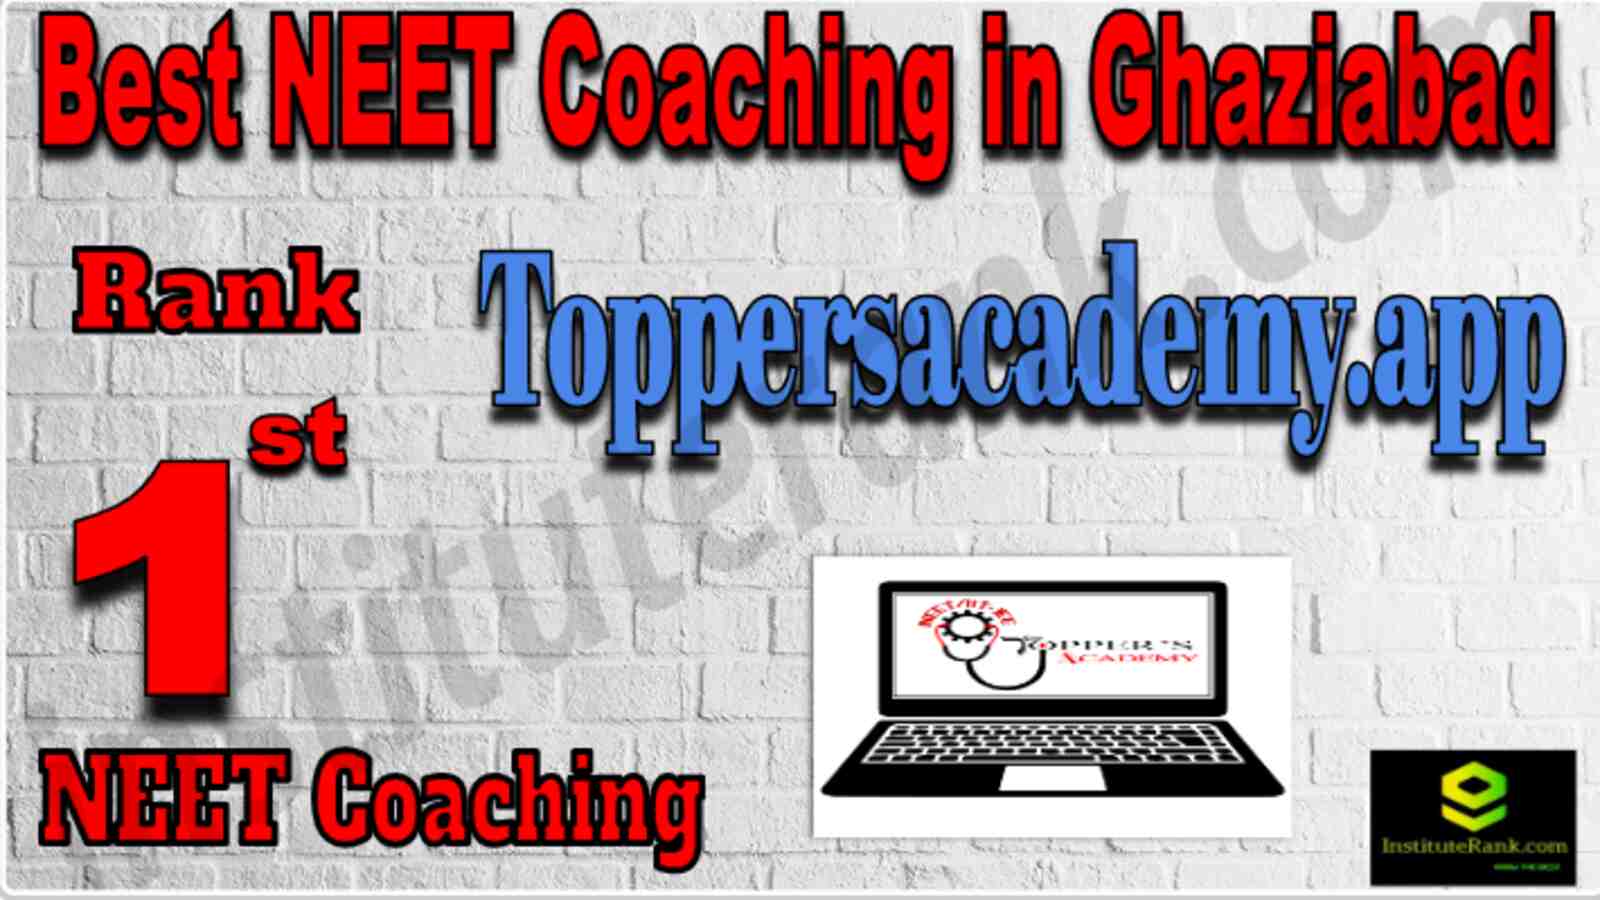 Rank 1 Best NEET Coaching in Ghaziabad 2022